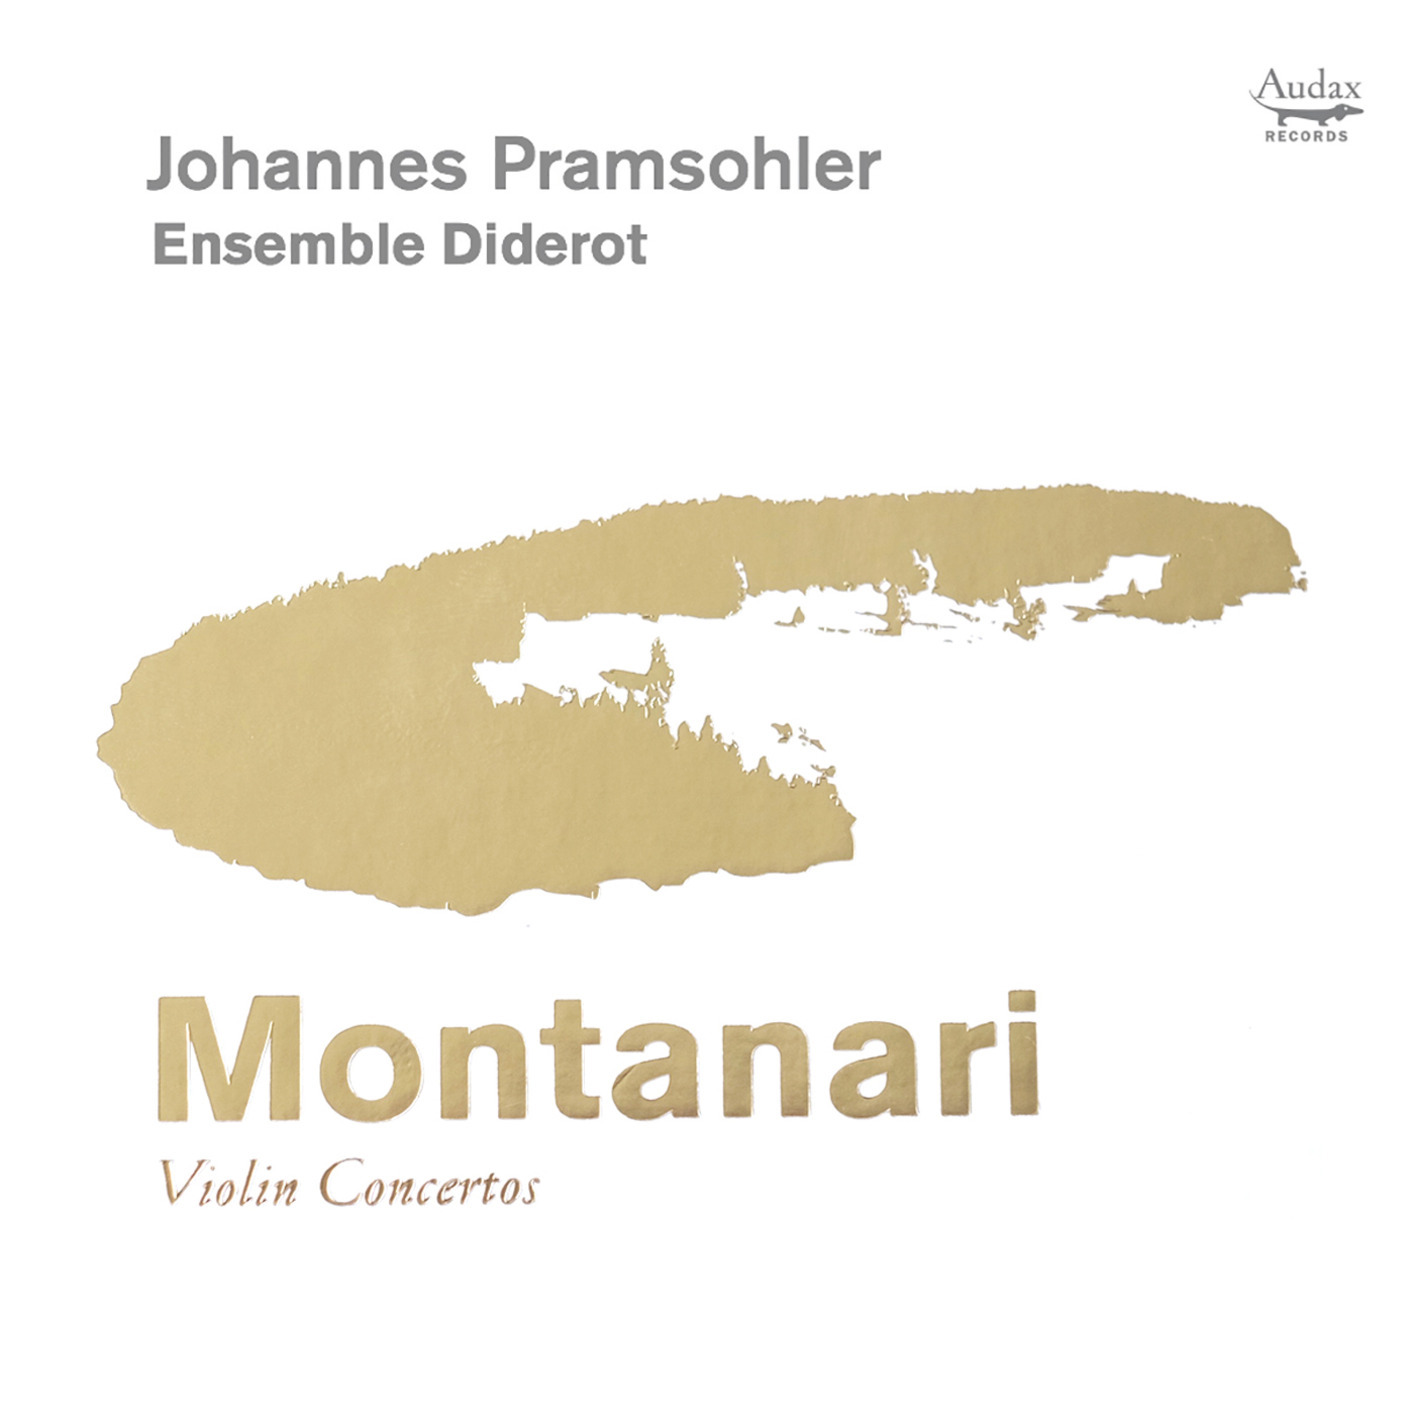 Johannes Pramsohler, Ensemble Diderot – Montanari: Violin Concertos (2015) [HighResAudio FLAC 24bit/96kHz]